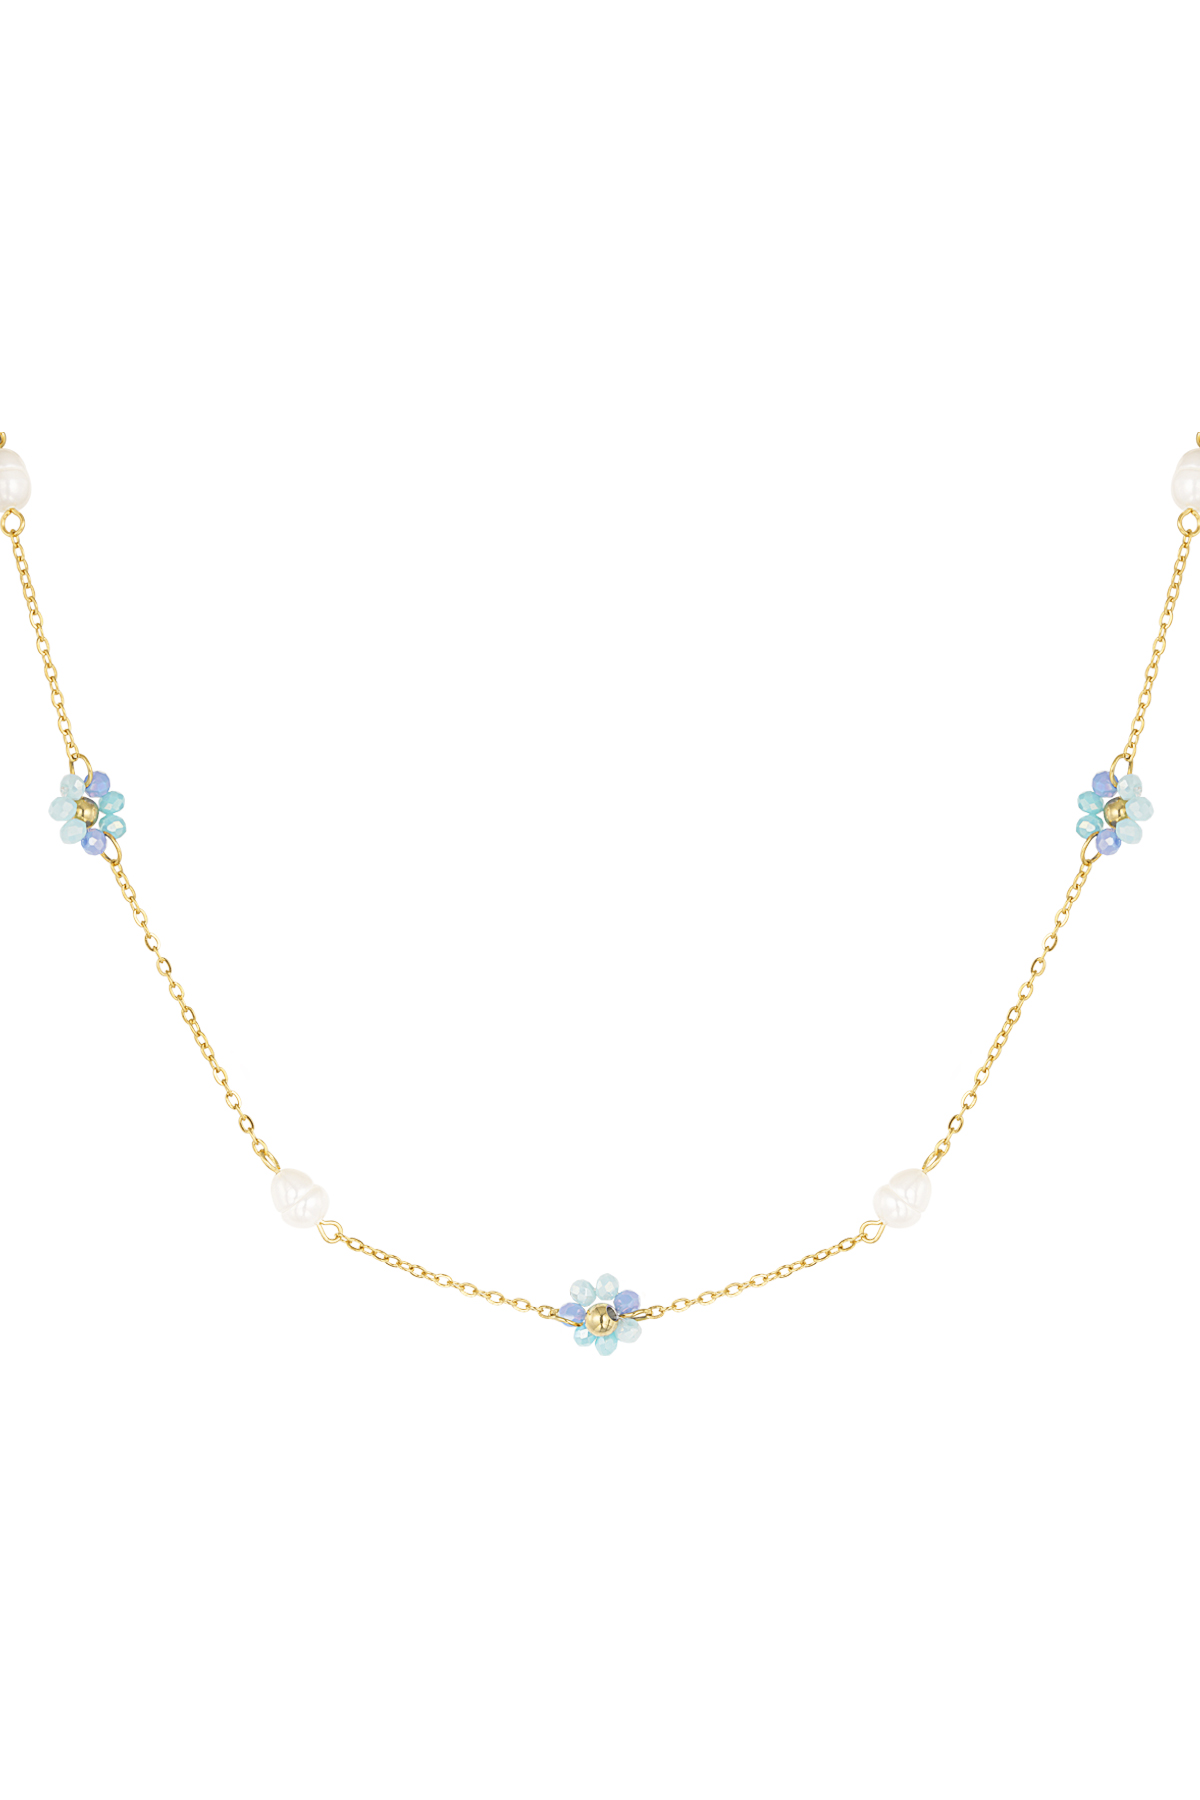 Klassische florale Perlenkette – blau/gold 